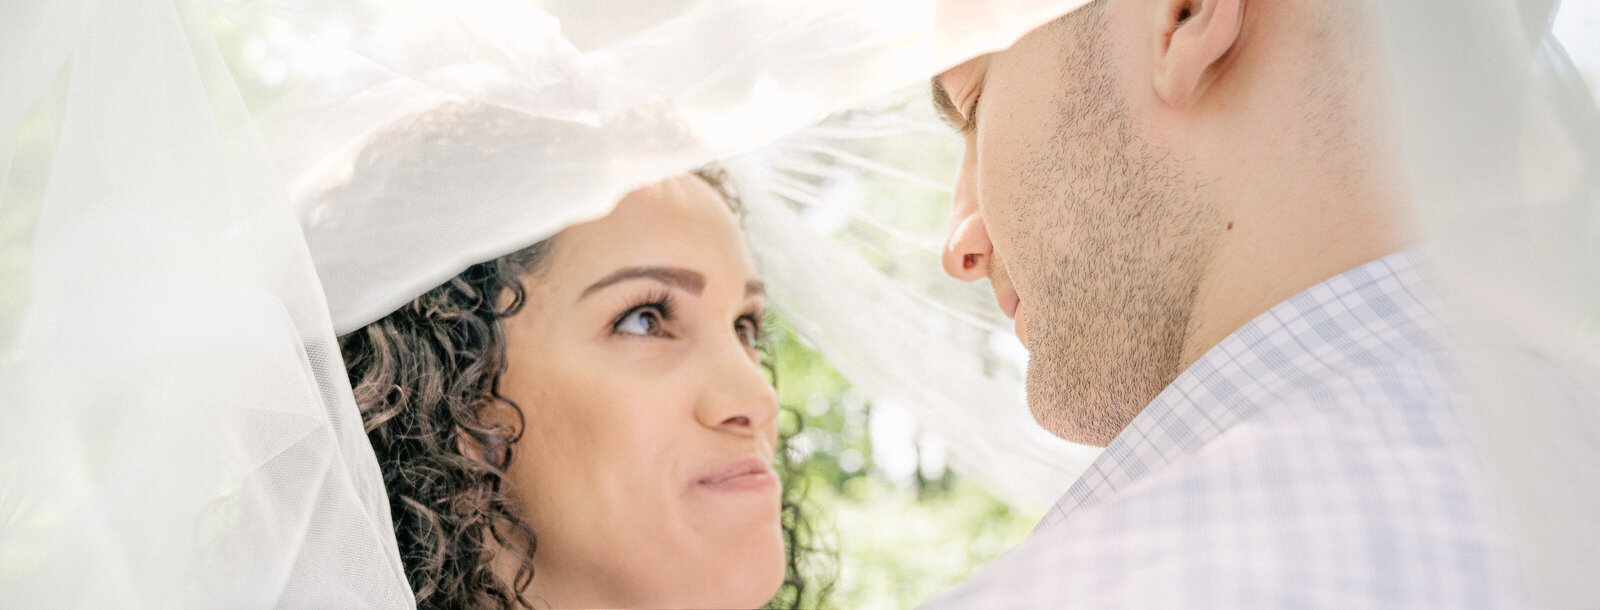 Naomi and John gaze into each other's eyes standing under a wedding veil